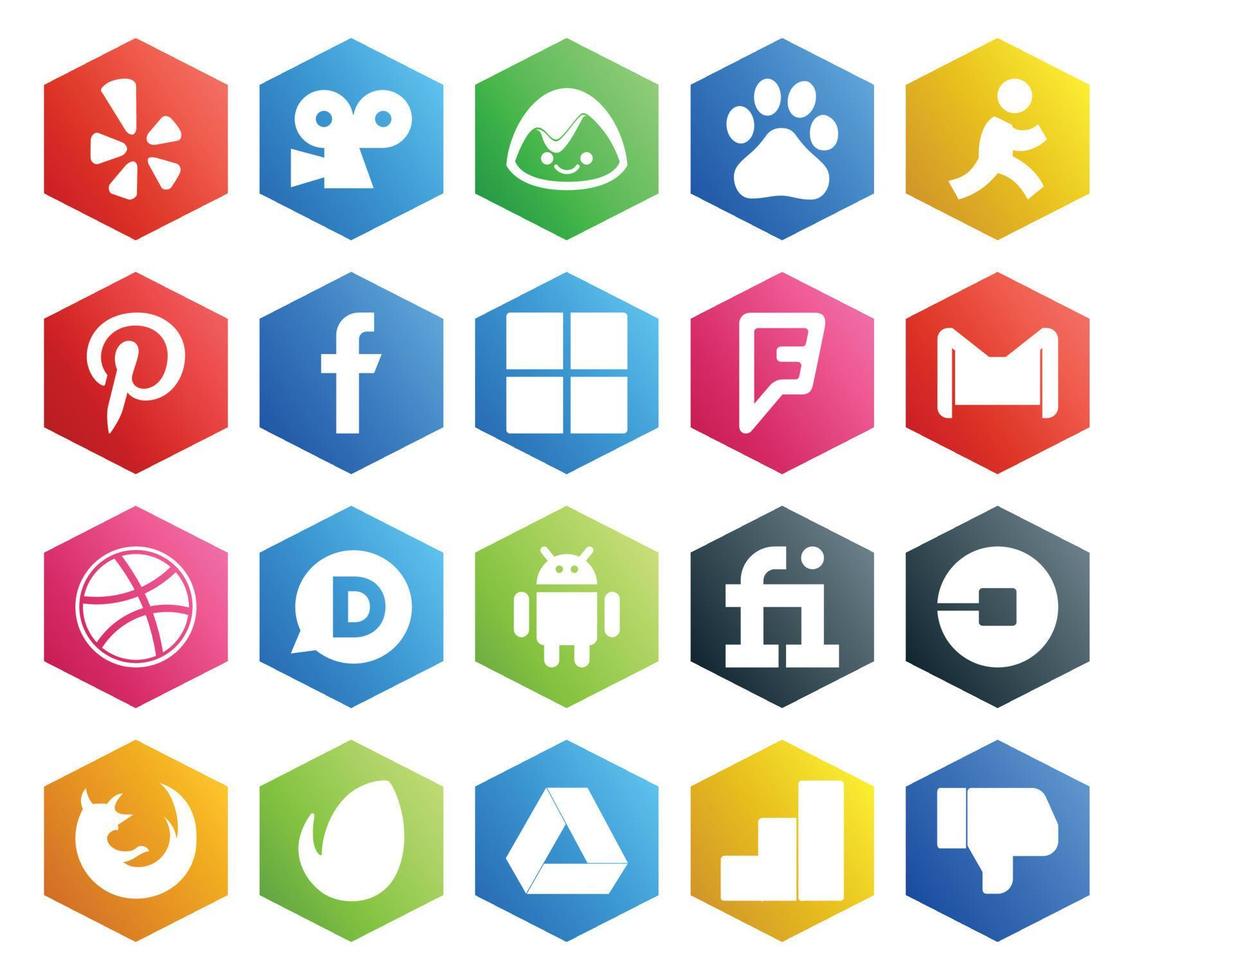 20 Social-Media-Icon-Packs, einschließlich Auto Fiverr Foursquare Android Dribbble vektor